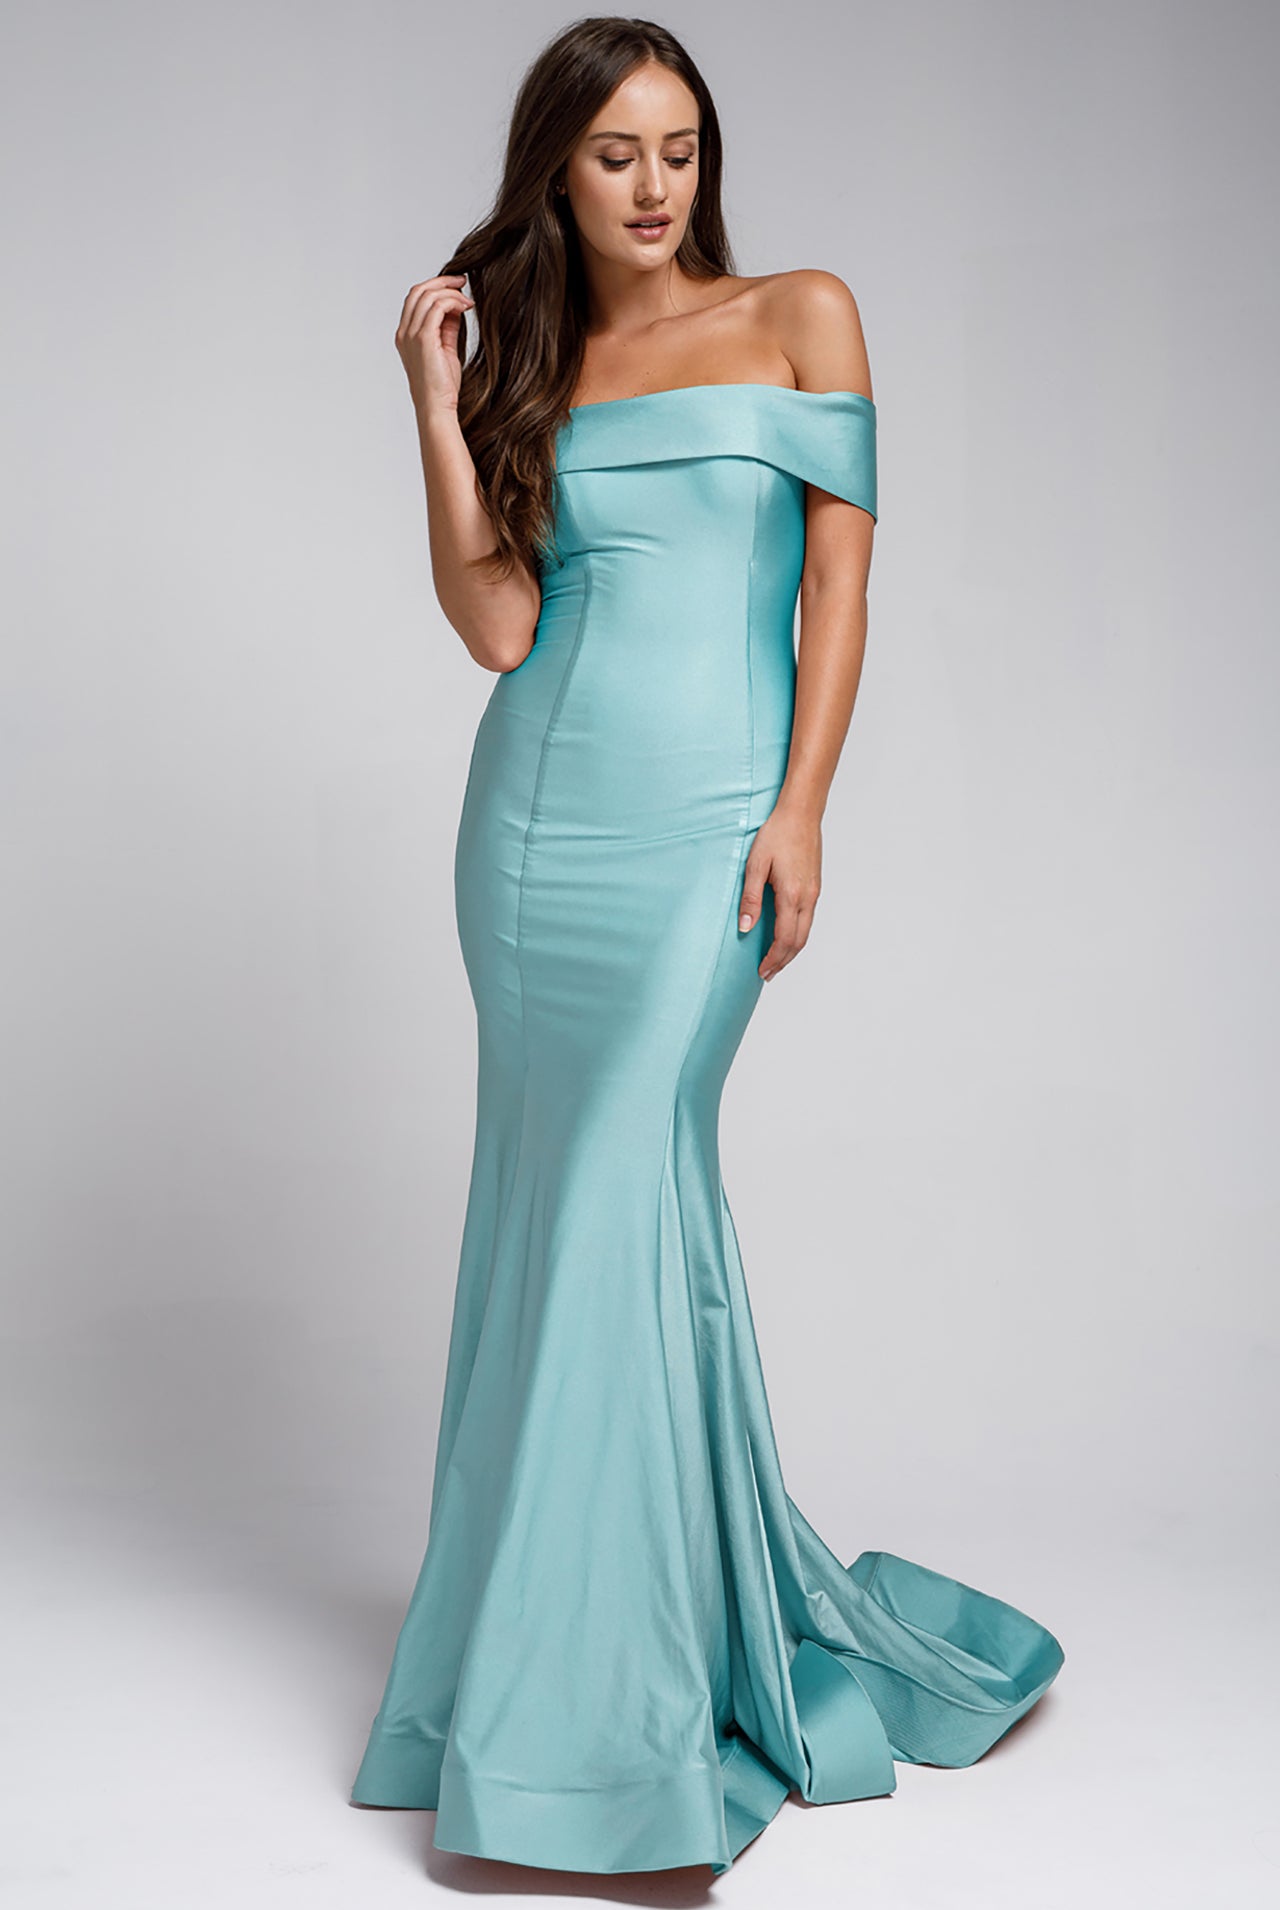 Off Shoulder Mermaid Fitted Long Evening & Wedding Dress AC373-Prom Dress-smcfashion.com